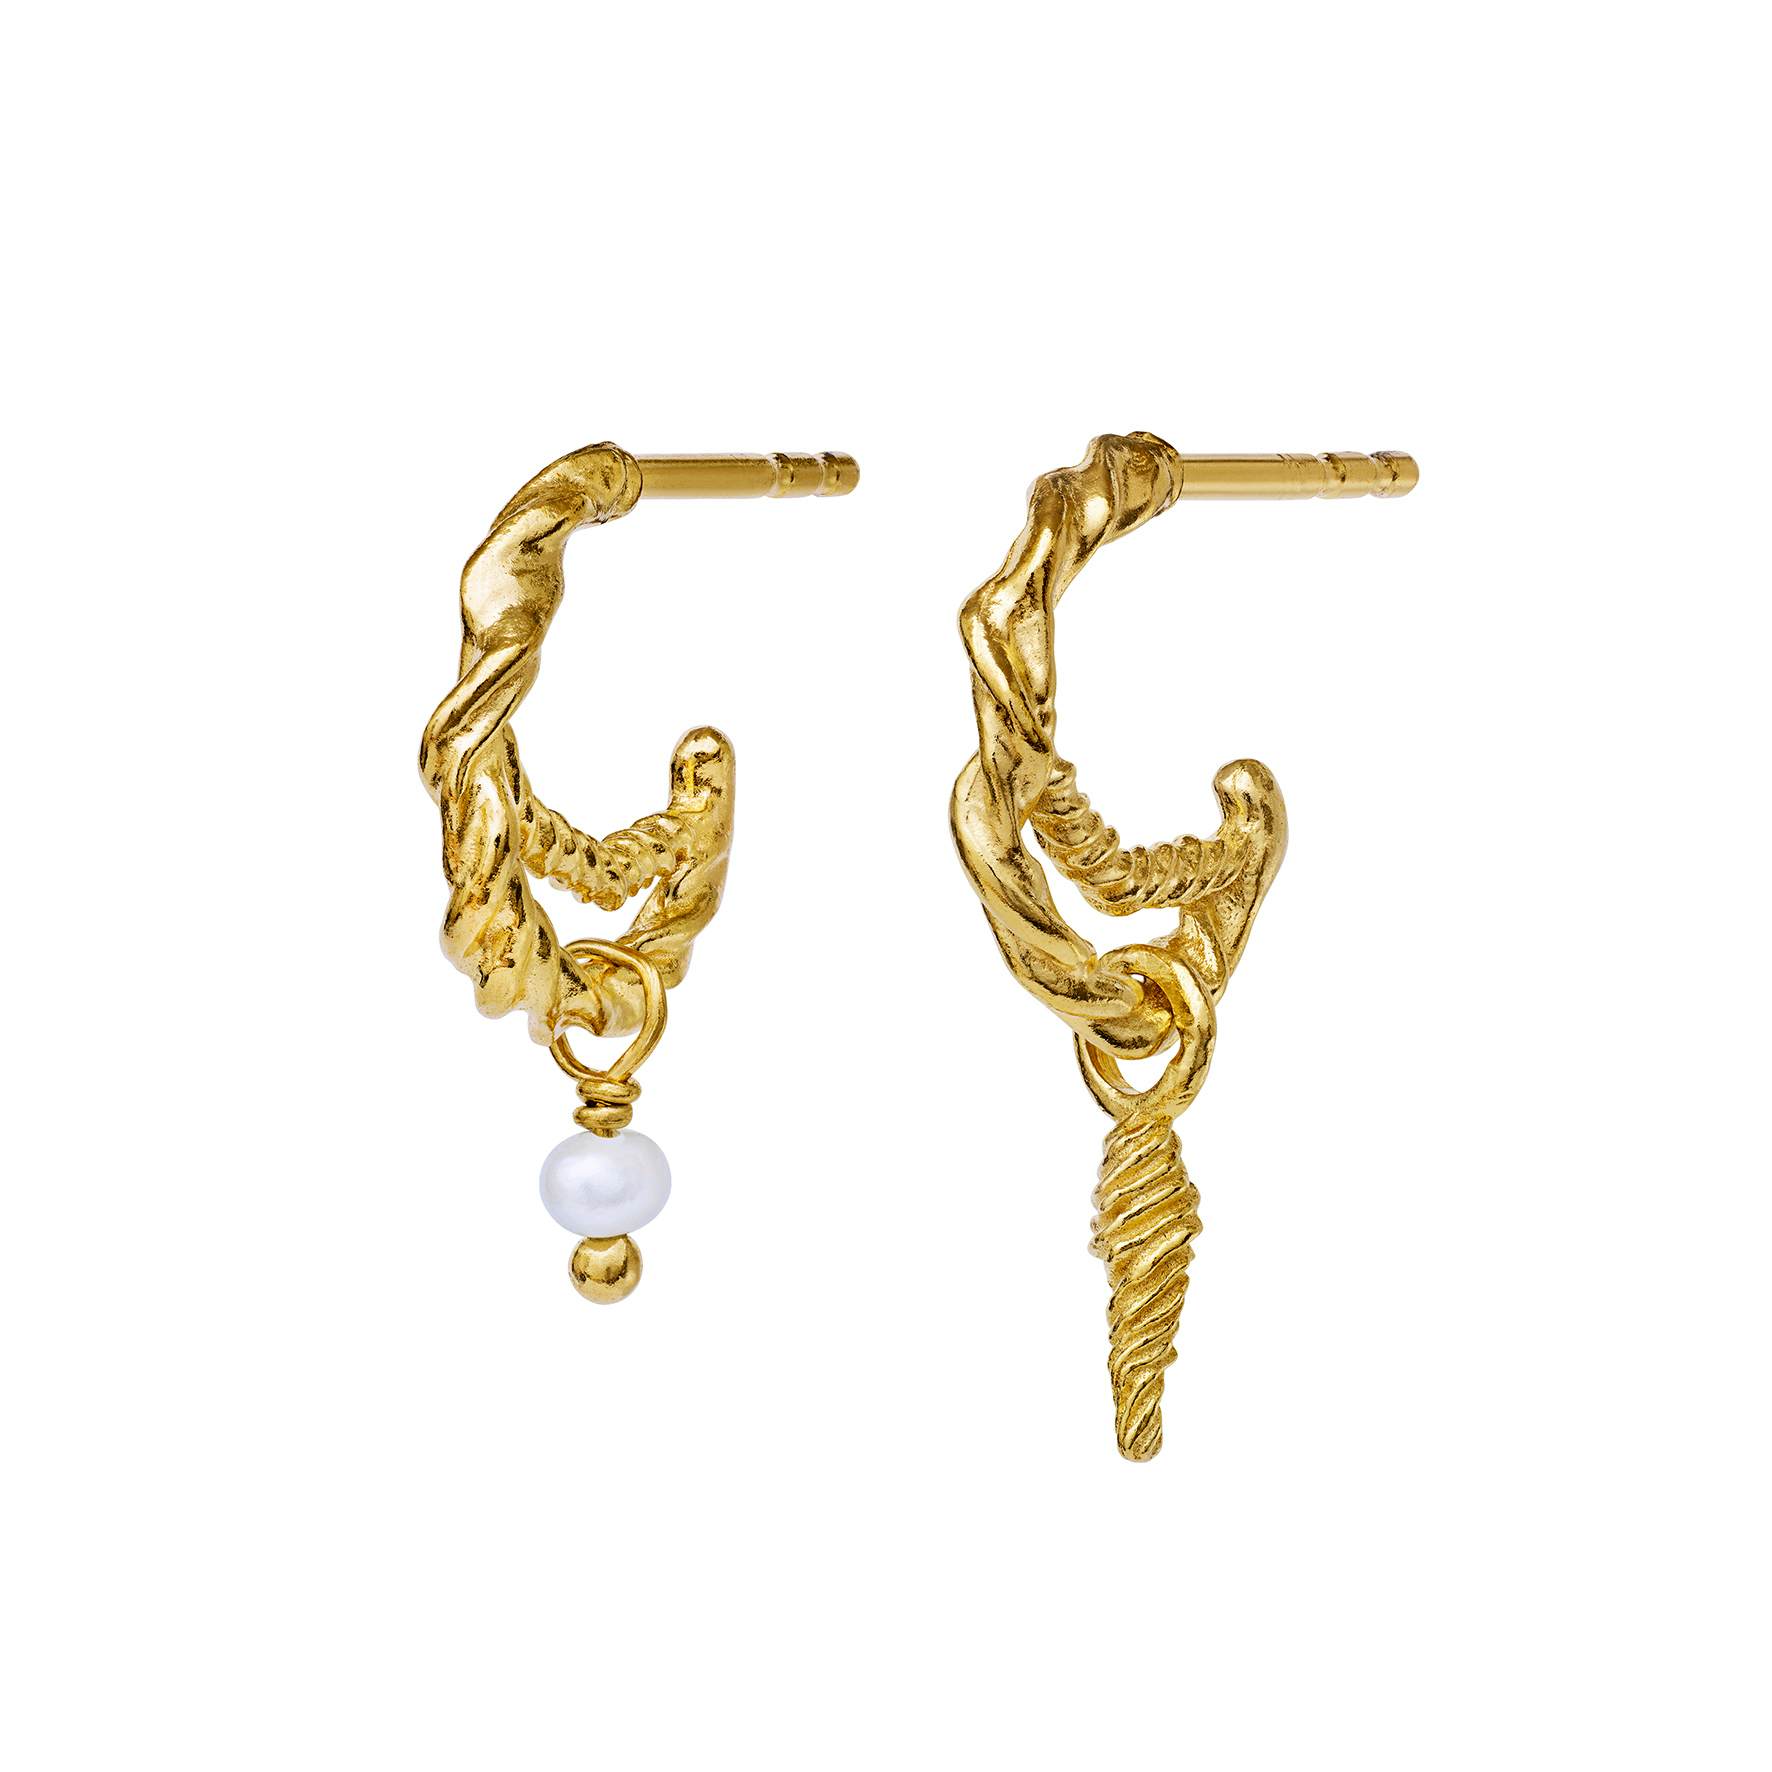 Duo Earrings von Maanesten in Vergoldet-Silber Sterling 925|Freshwater Pearl